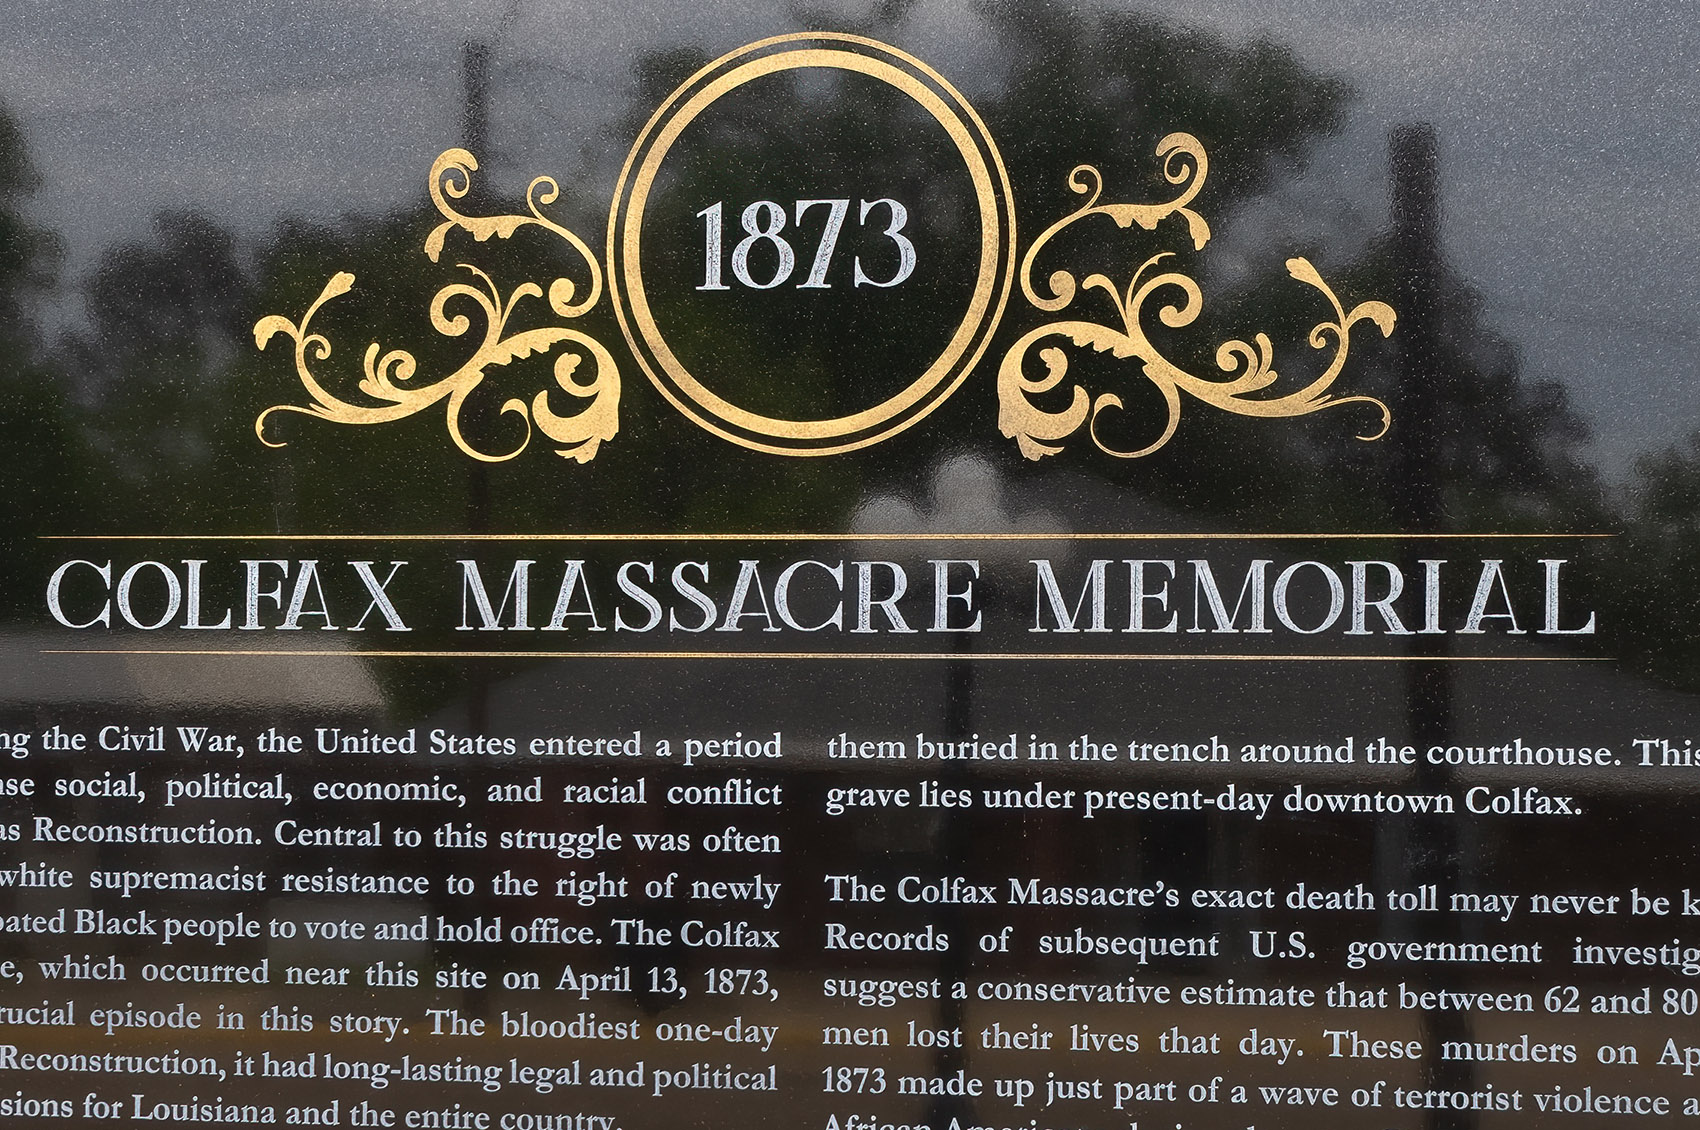 dark granite memorial with date 1873 and colfax massacre